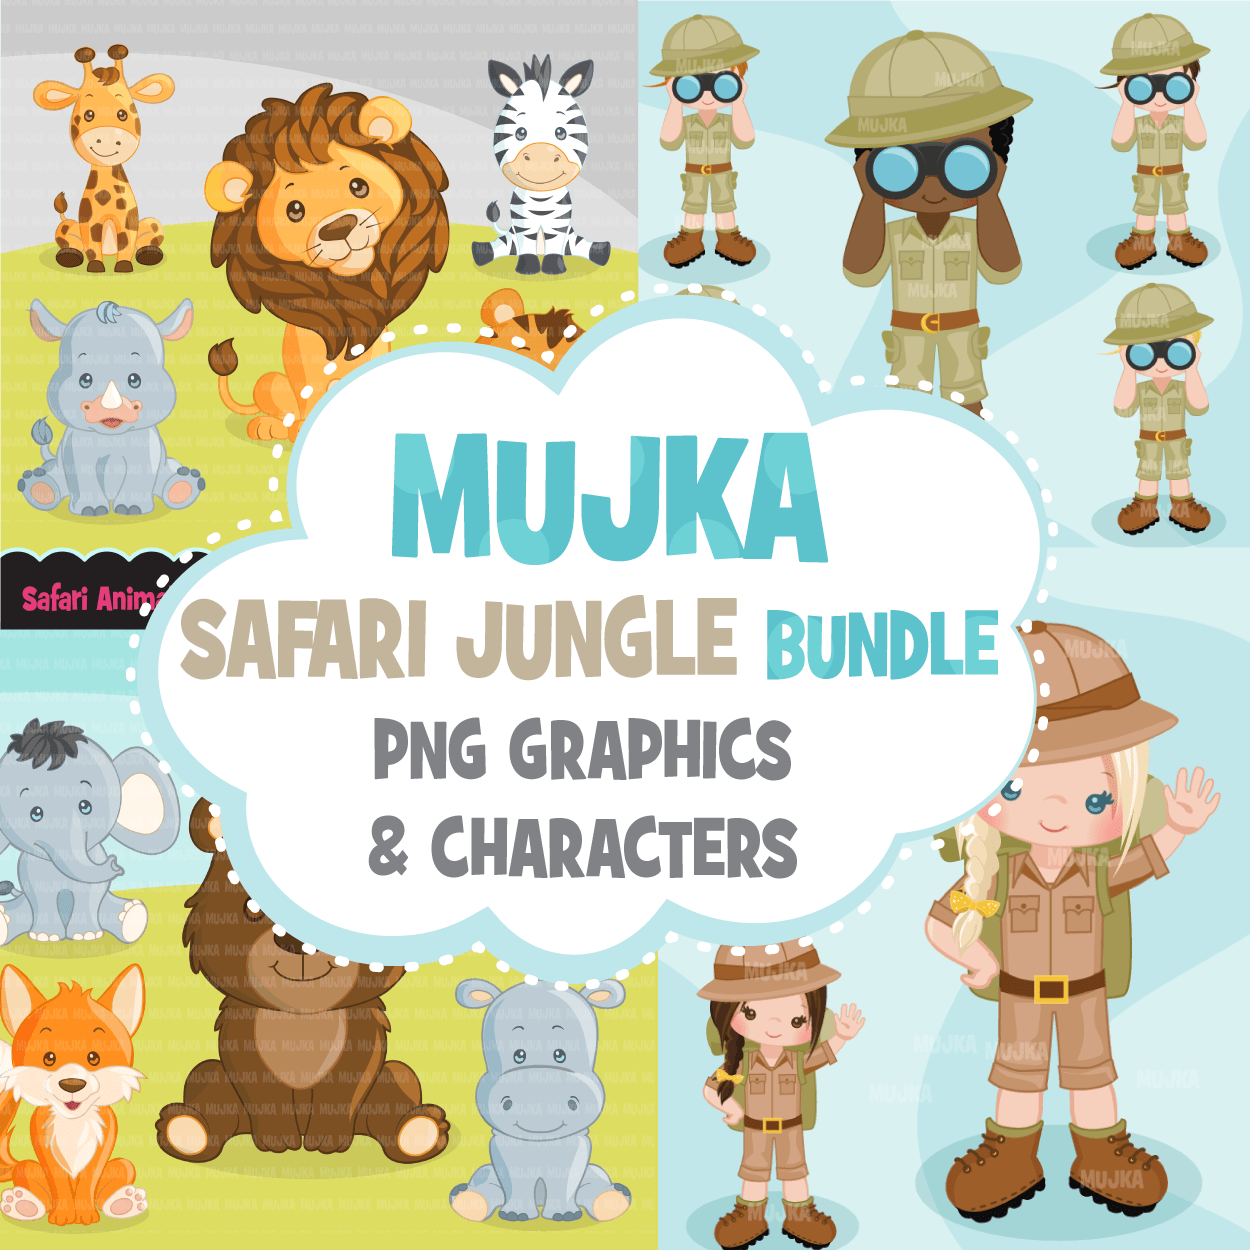 Safari clipart Bundle. Collection of safari animals, safari characters and graphics, lion, giraffe, hippo, zebra, monkey graphics